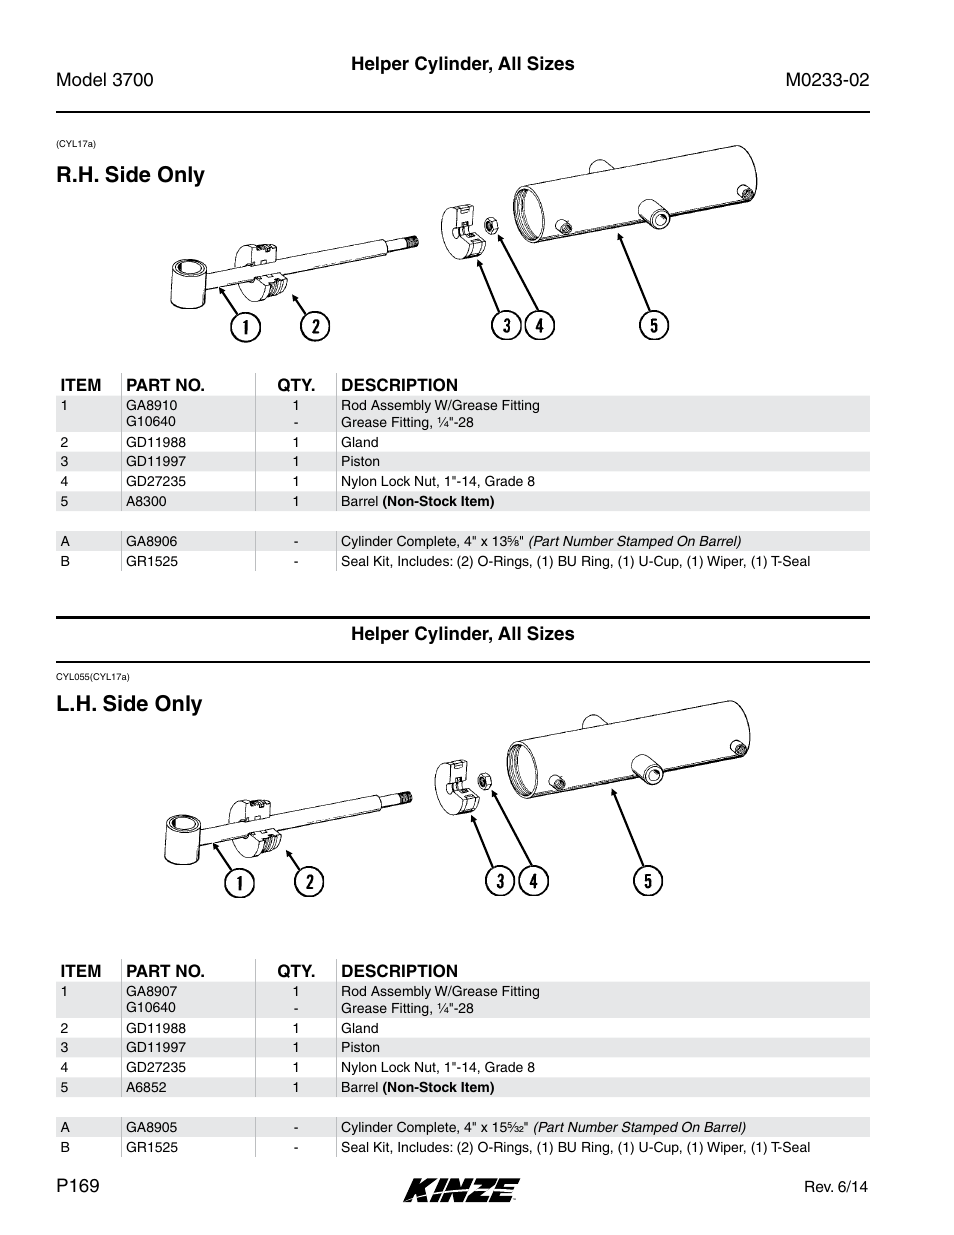 Helper cylinder, all sizes, R.h. side only, L.h. side only | Kinze 3700 Front Folding Planter Rev. 6/14 User Manual | Page 172 / 284